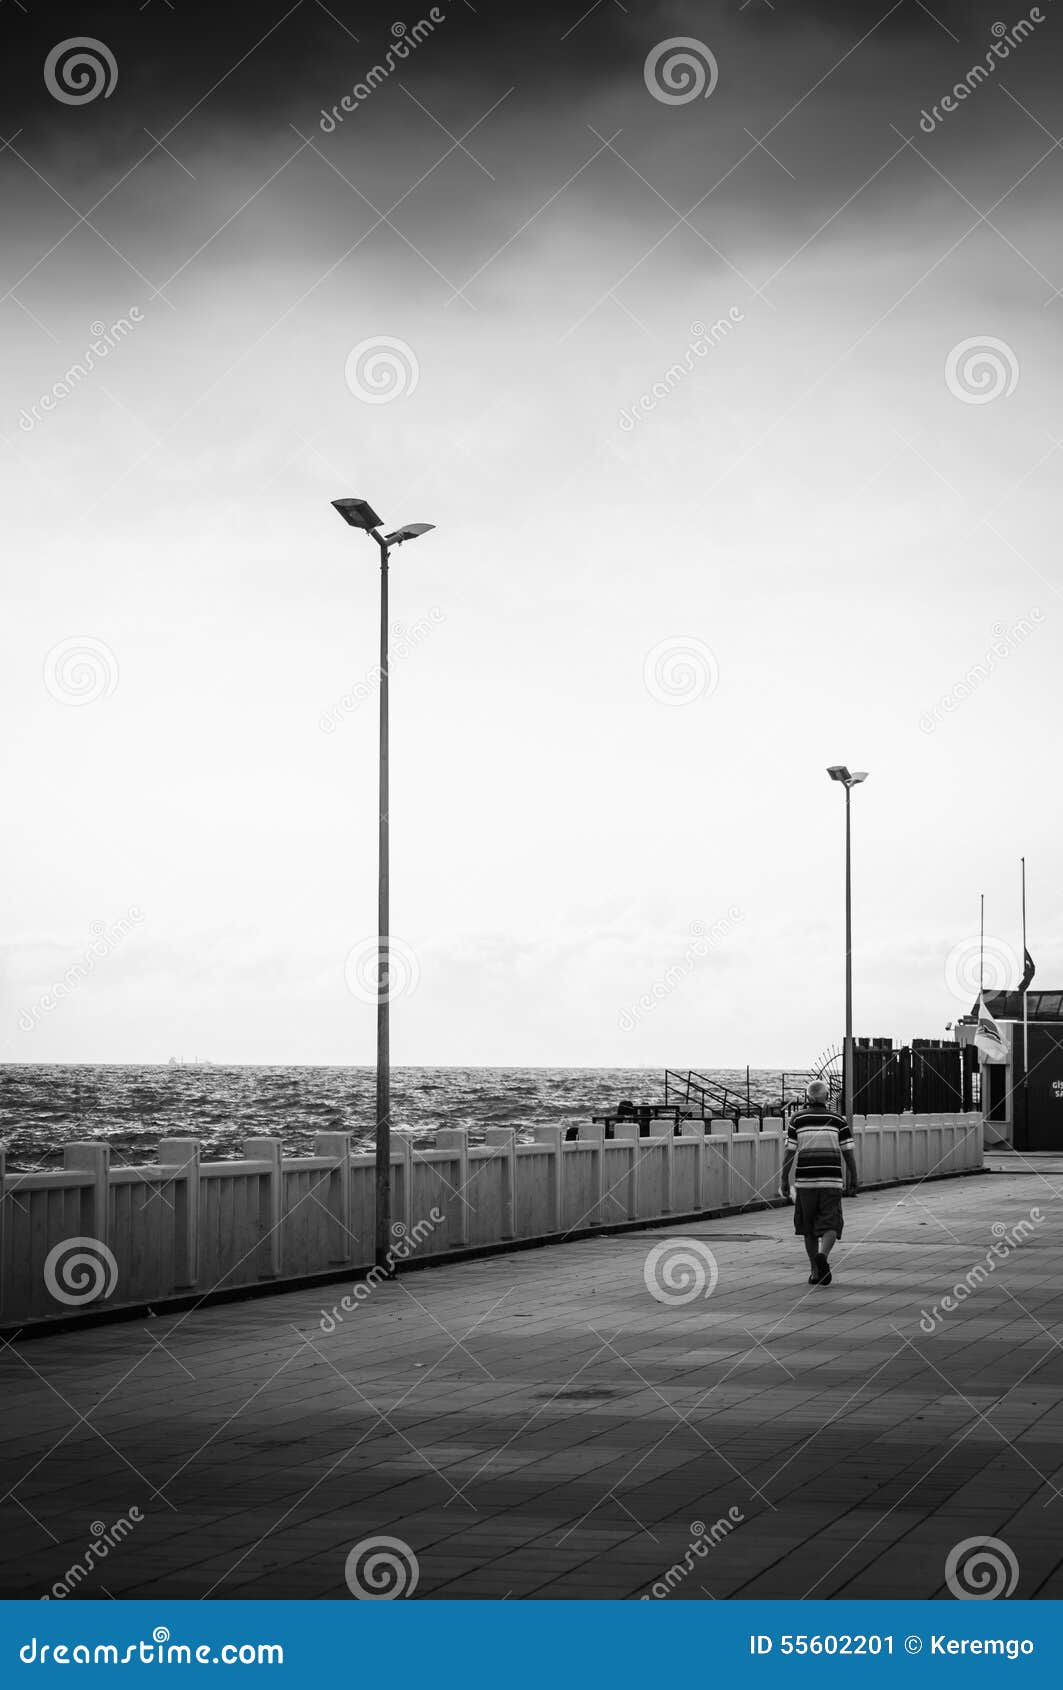 Senior Citizen Walking on the Seaside Editorial Photo - Image of ...